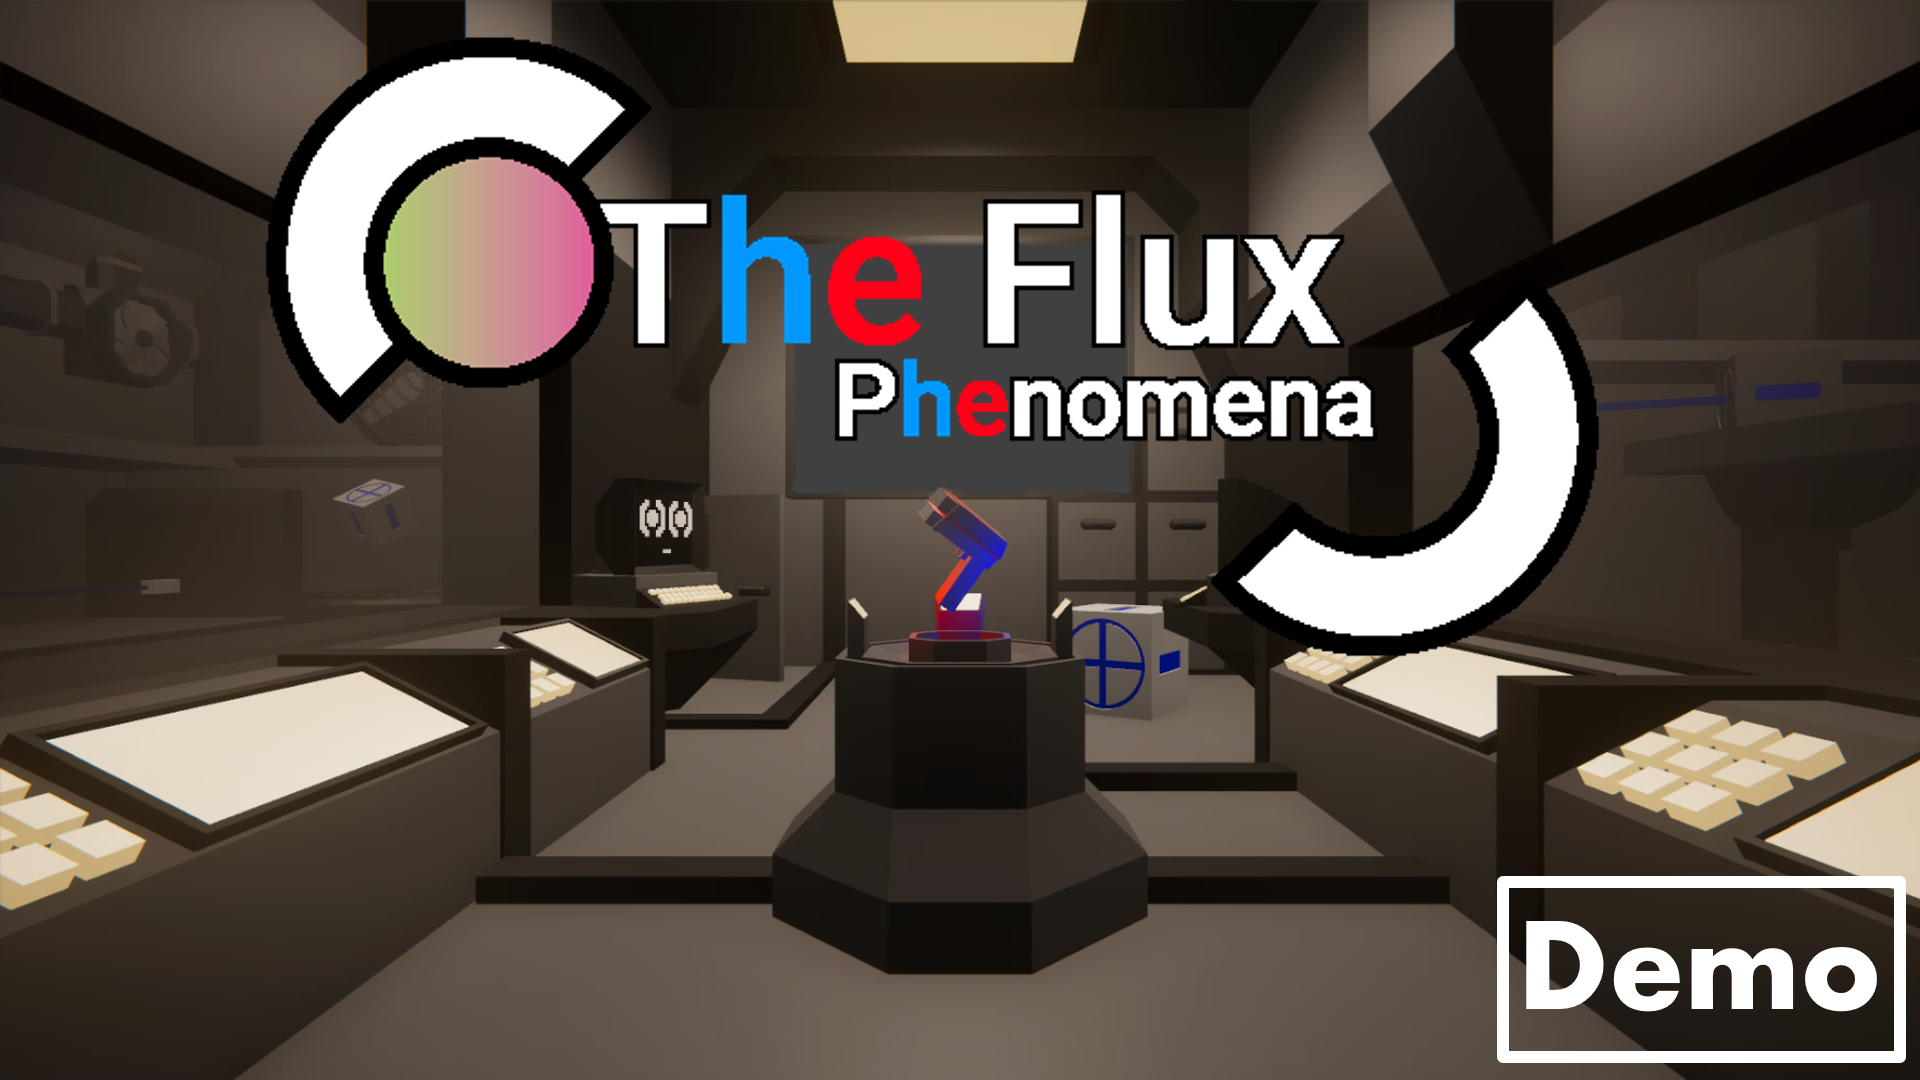 The Flux Phenomena (Demo)